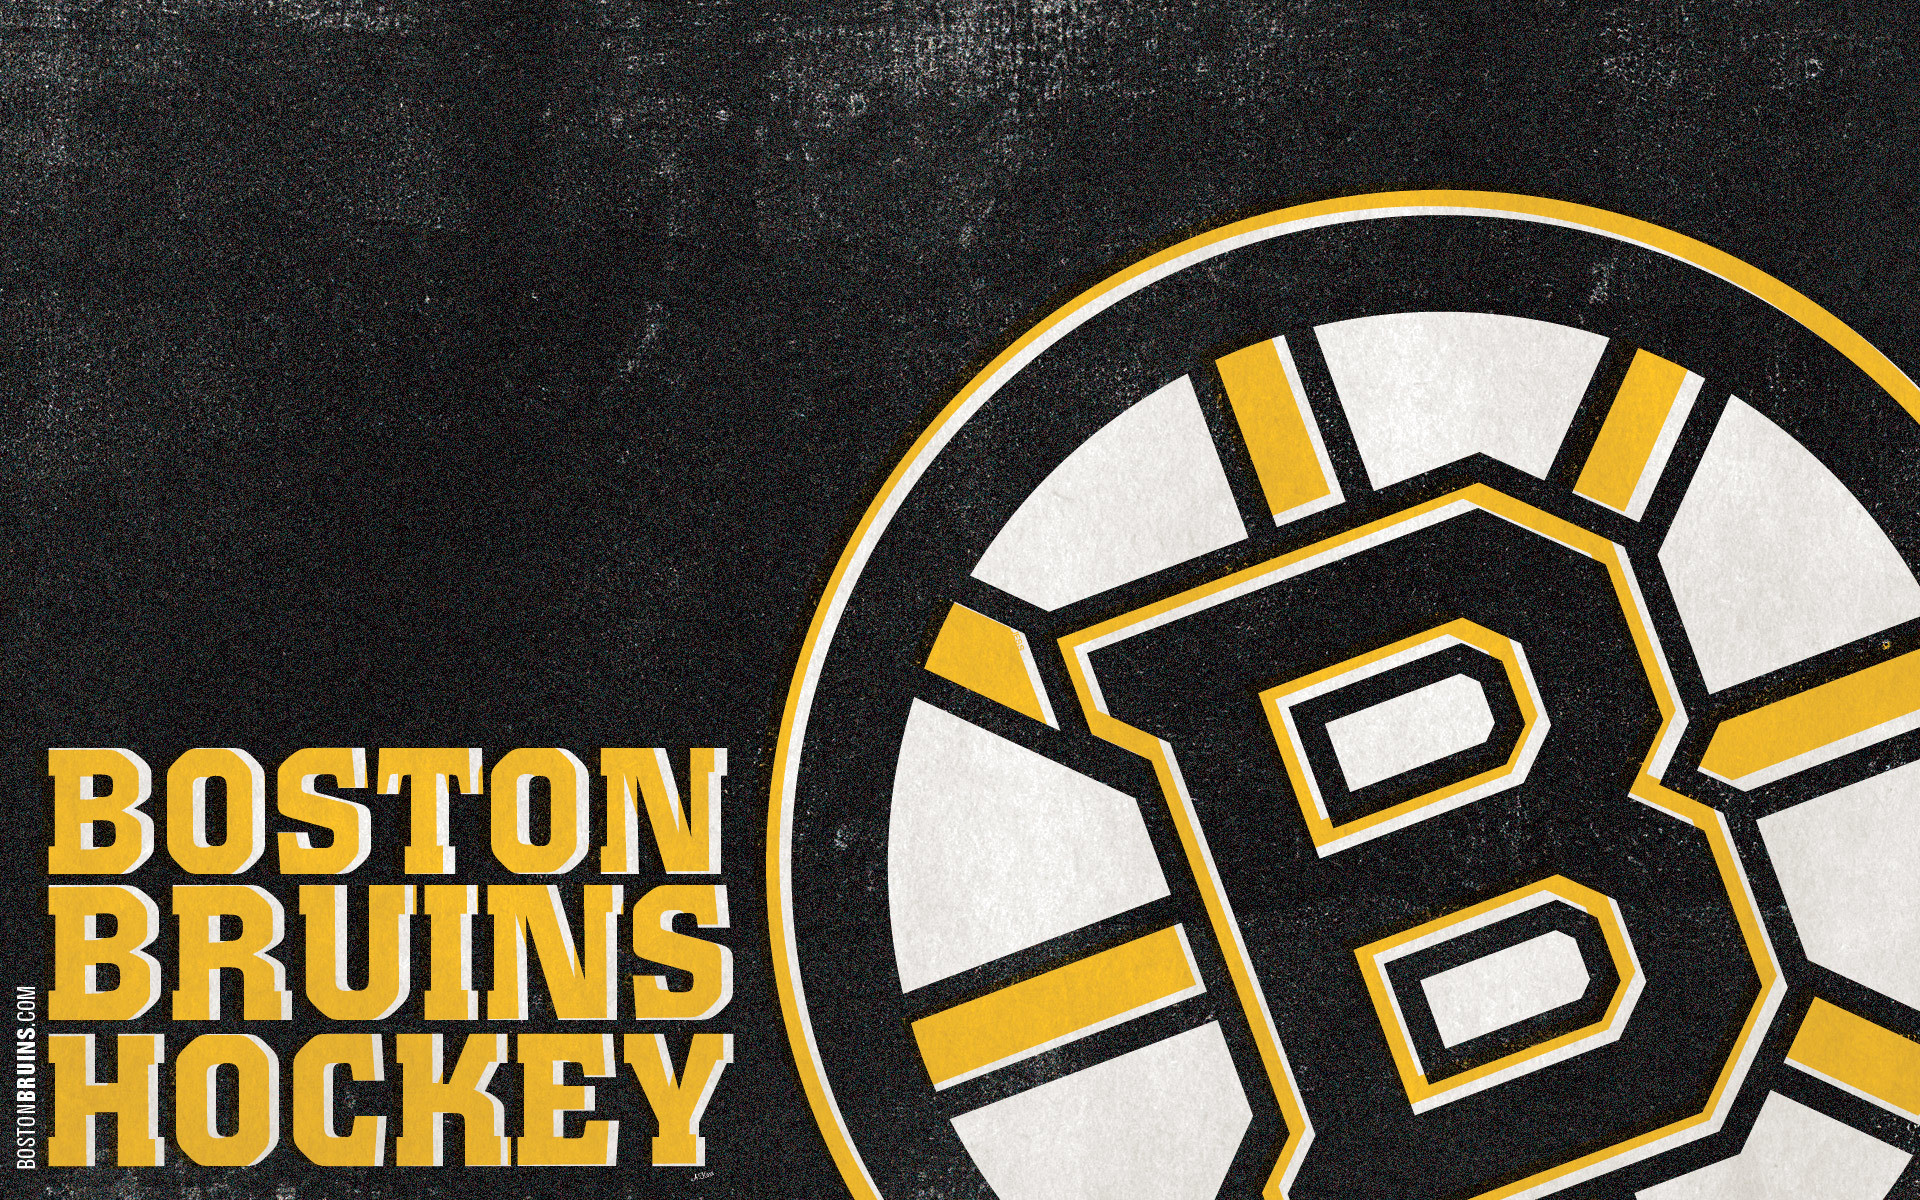 Boston Bruins phone wallpaper 1080P 2k 4k Full HD Wallpapers Backgrounds  Free Download  Wallpaper Crafter